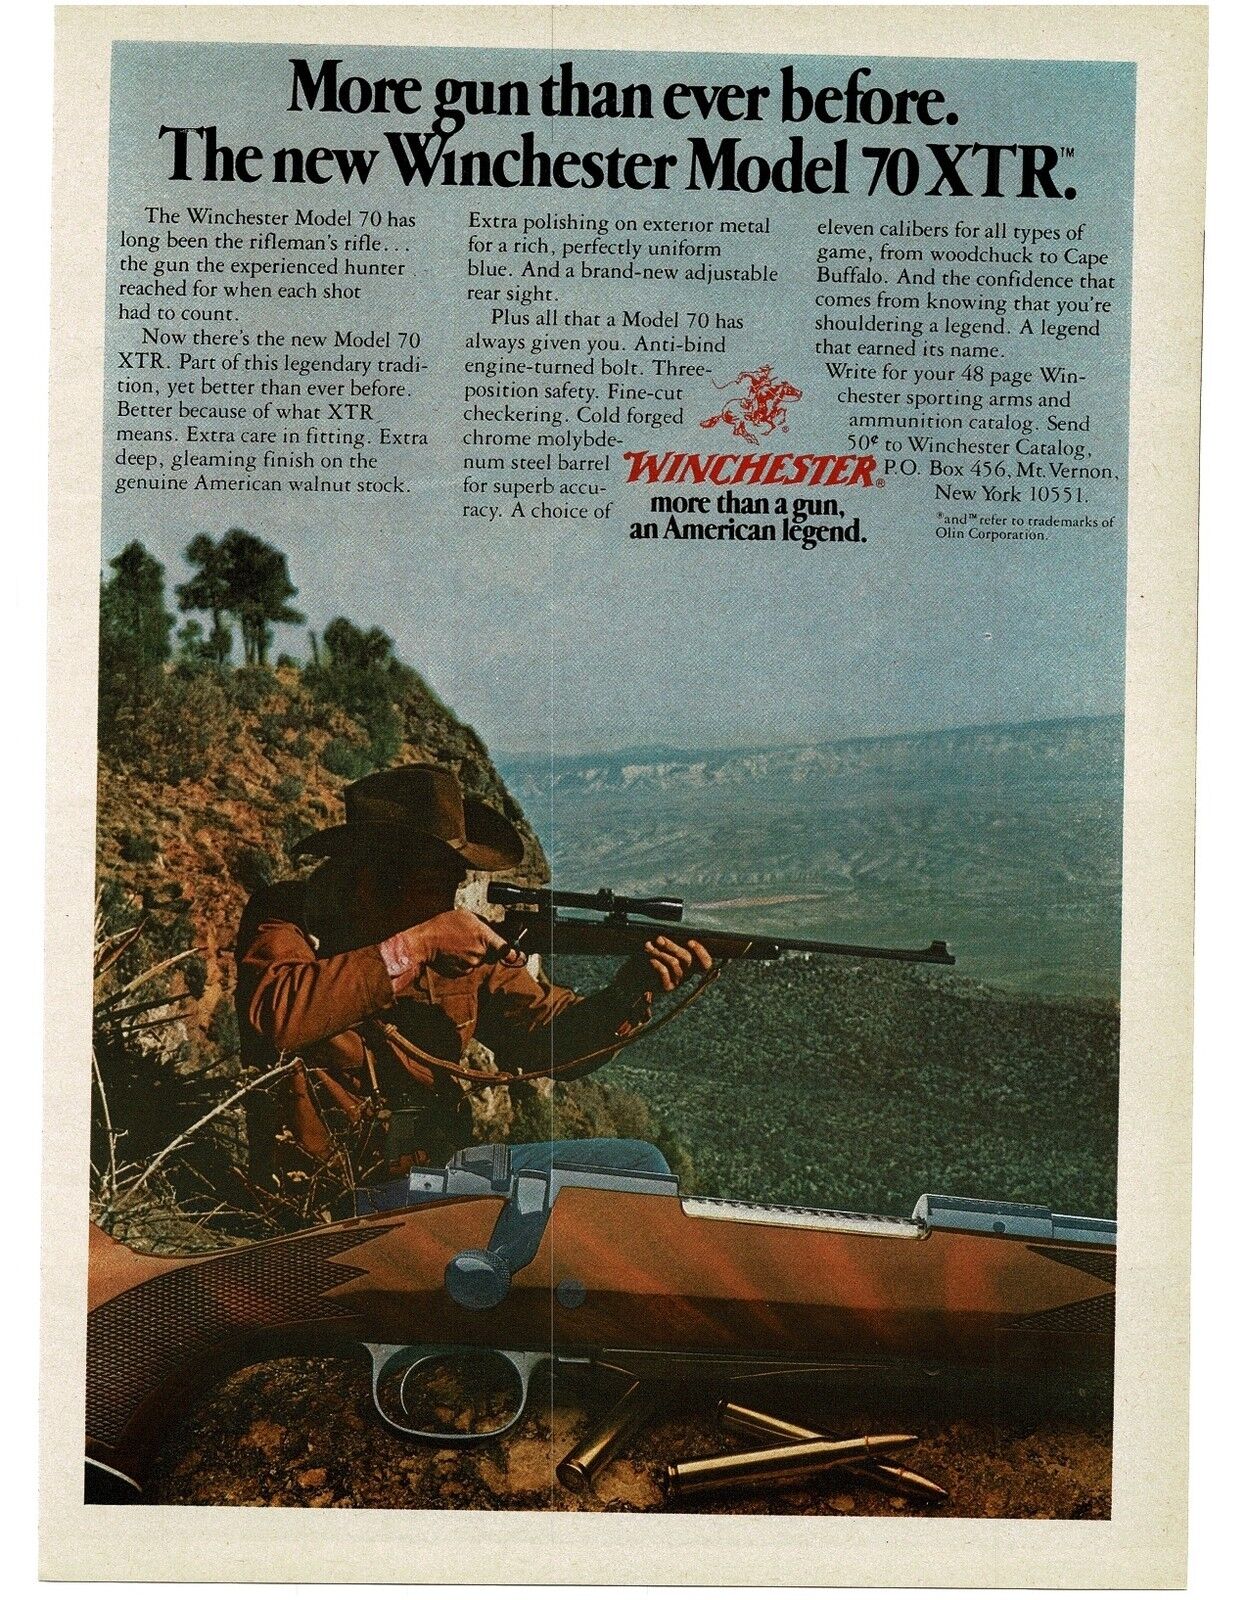 1978 WINCHESTER model 70 XTR Rifle Cowboy Hunter in High Desert Vintage Ad 